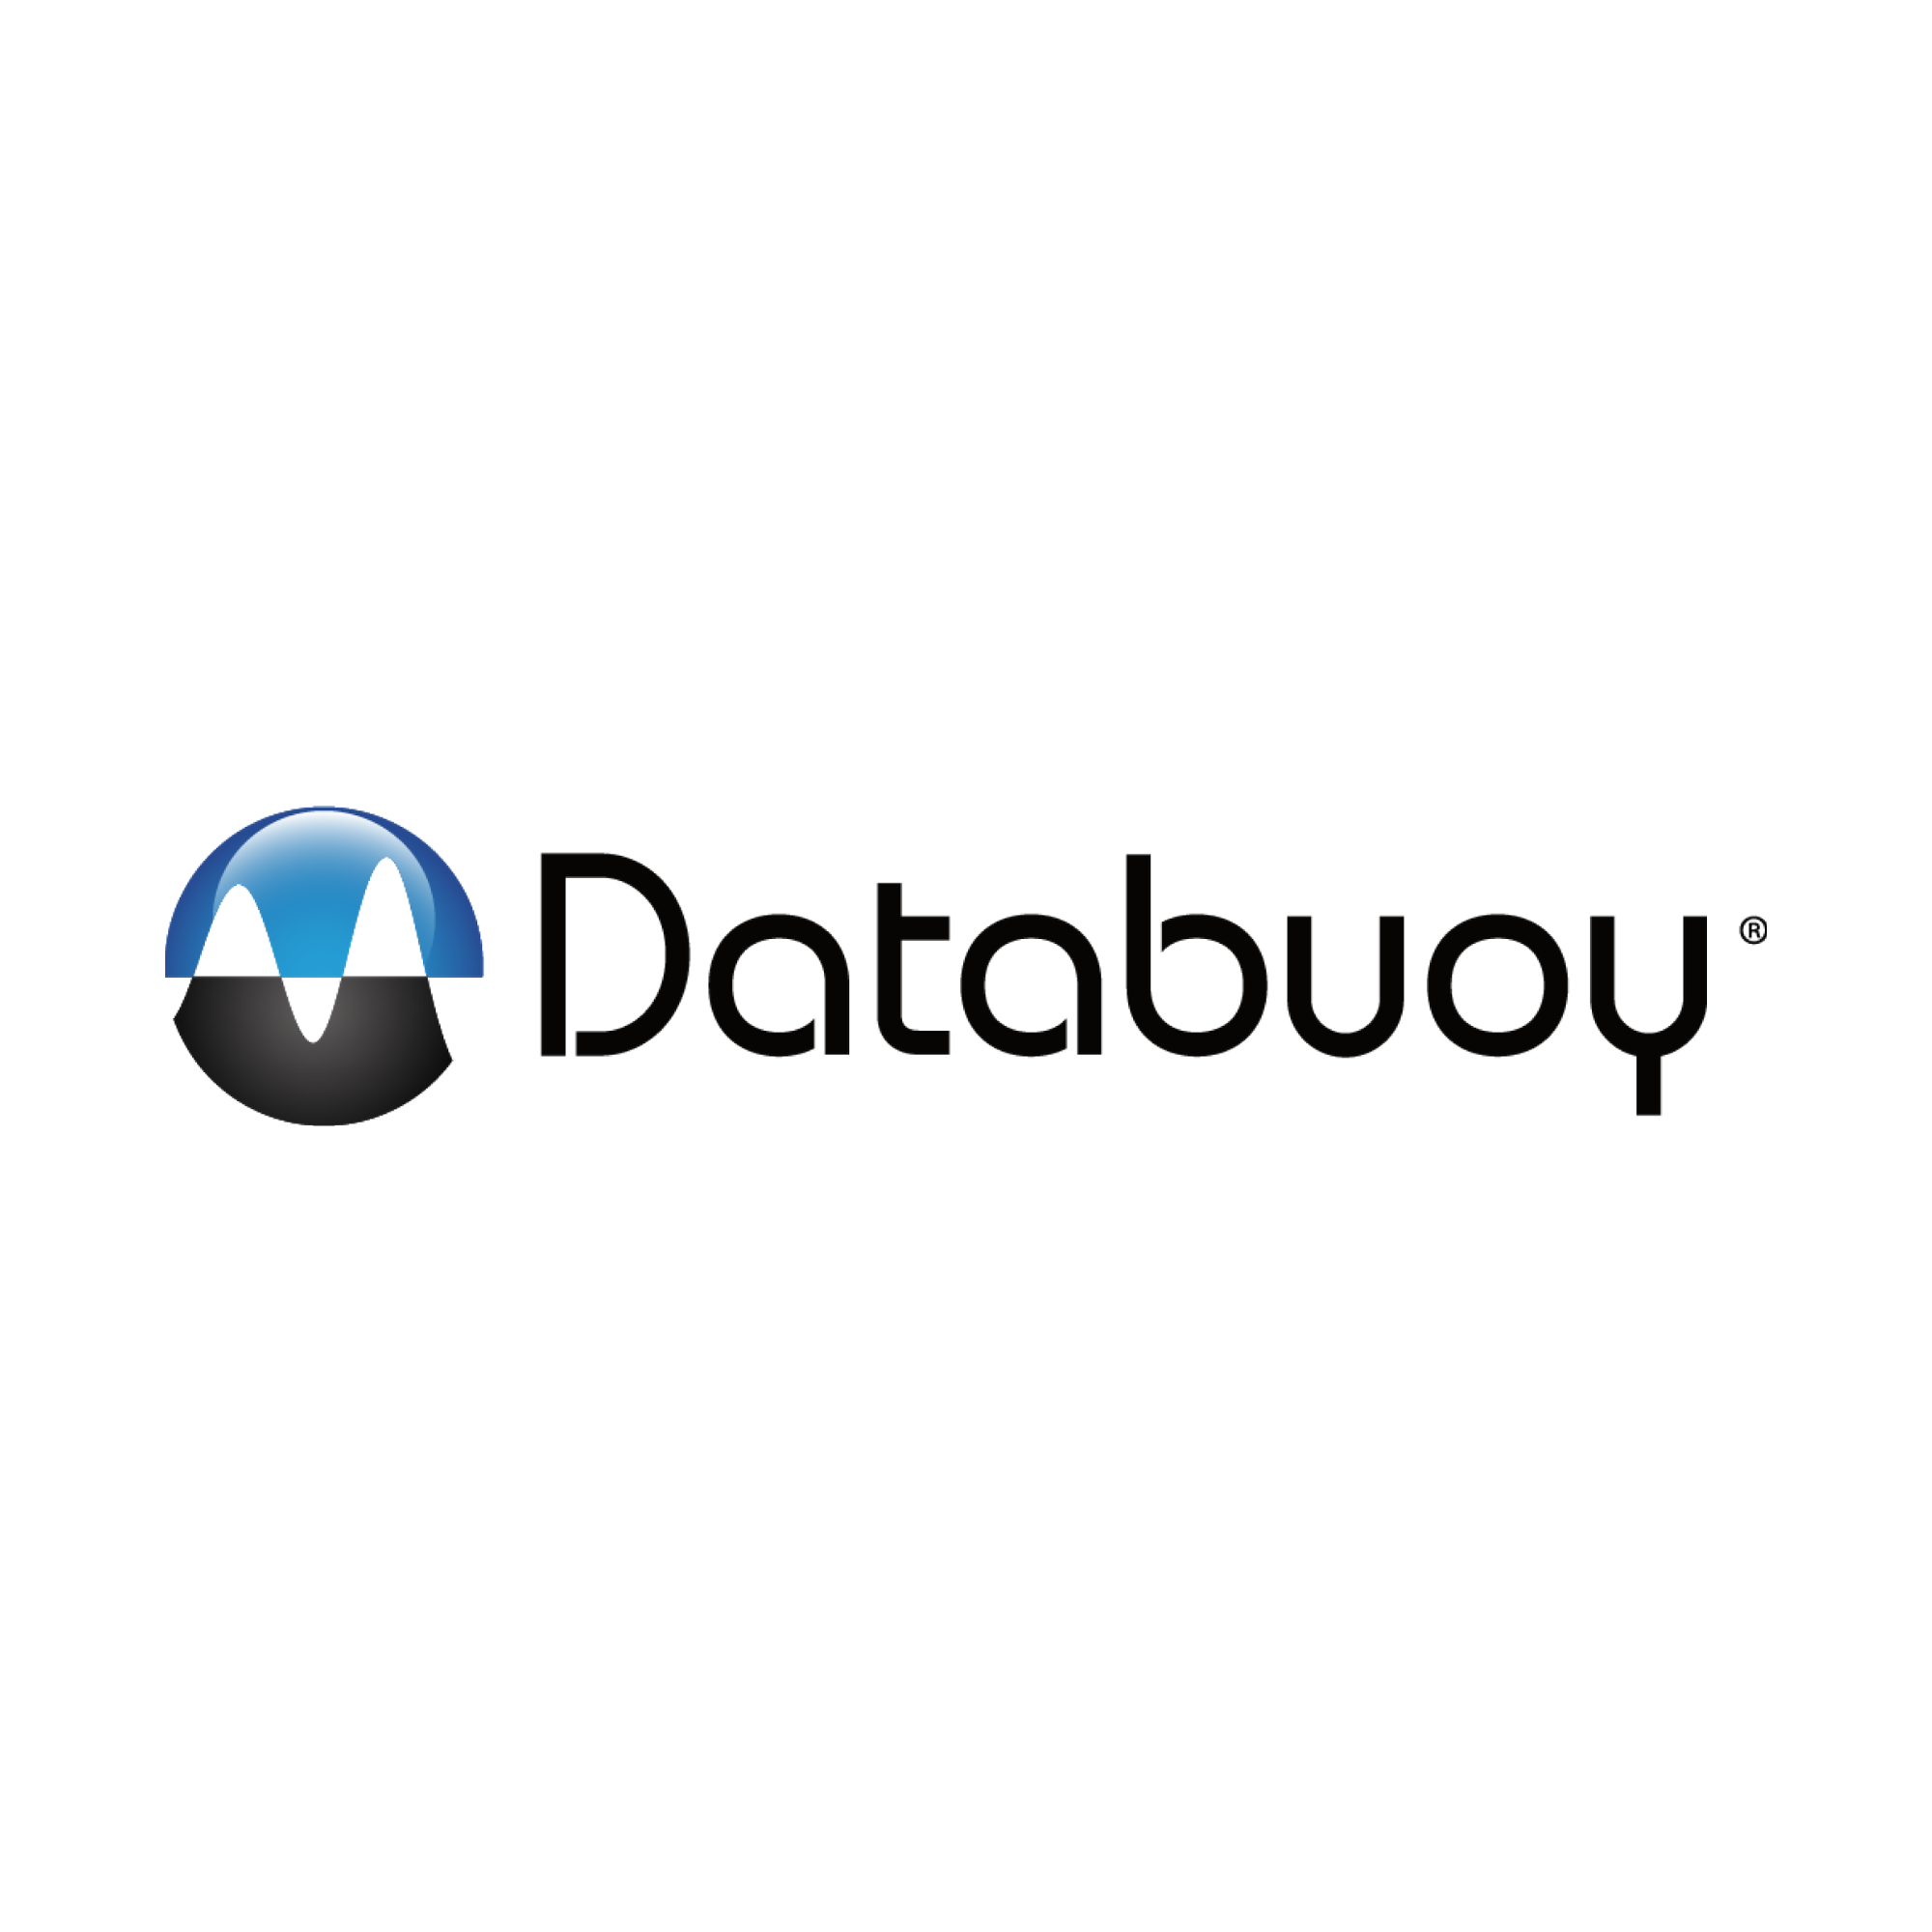 Databuoy